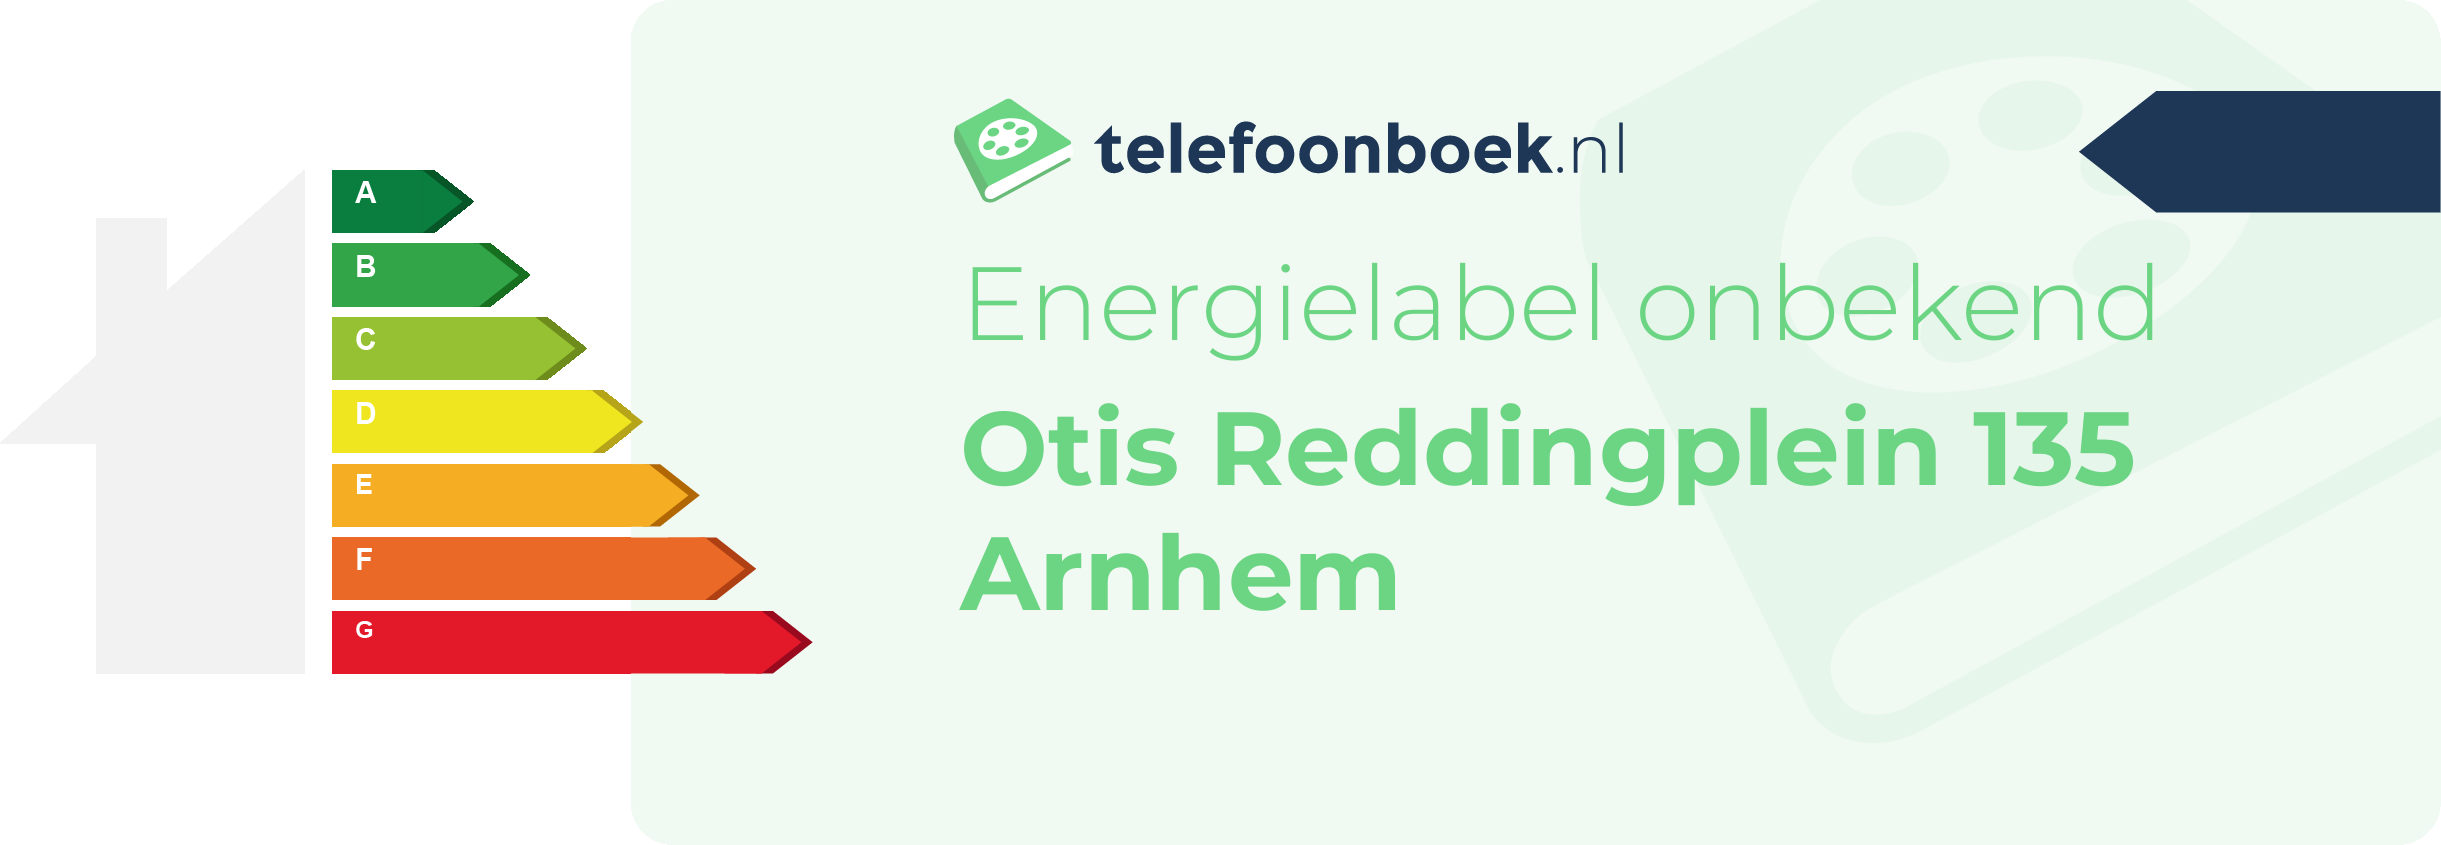 Energielabel Otis Reddingplein 135 Arnhem